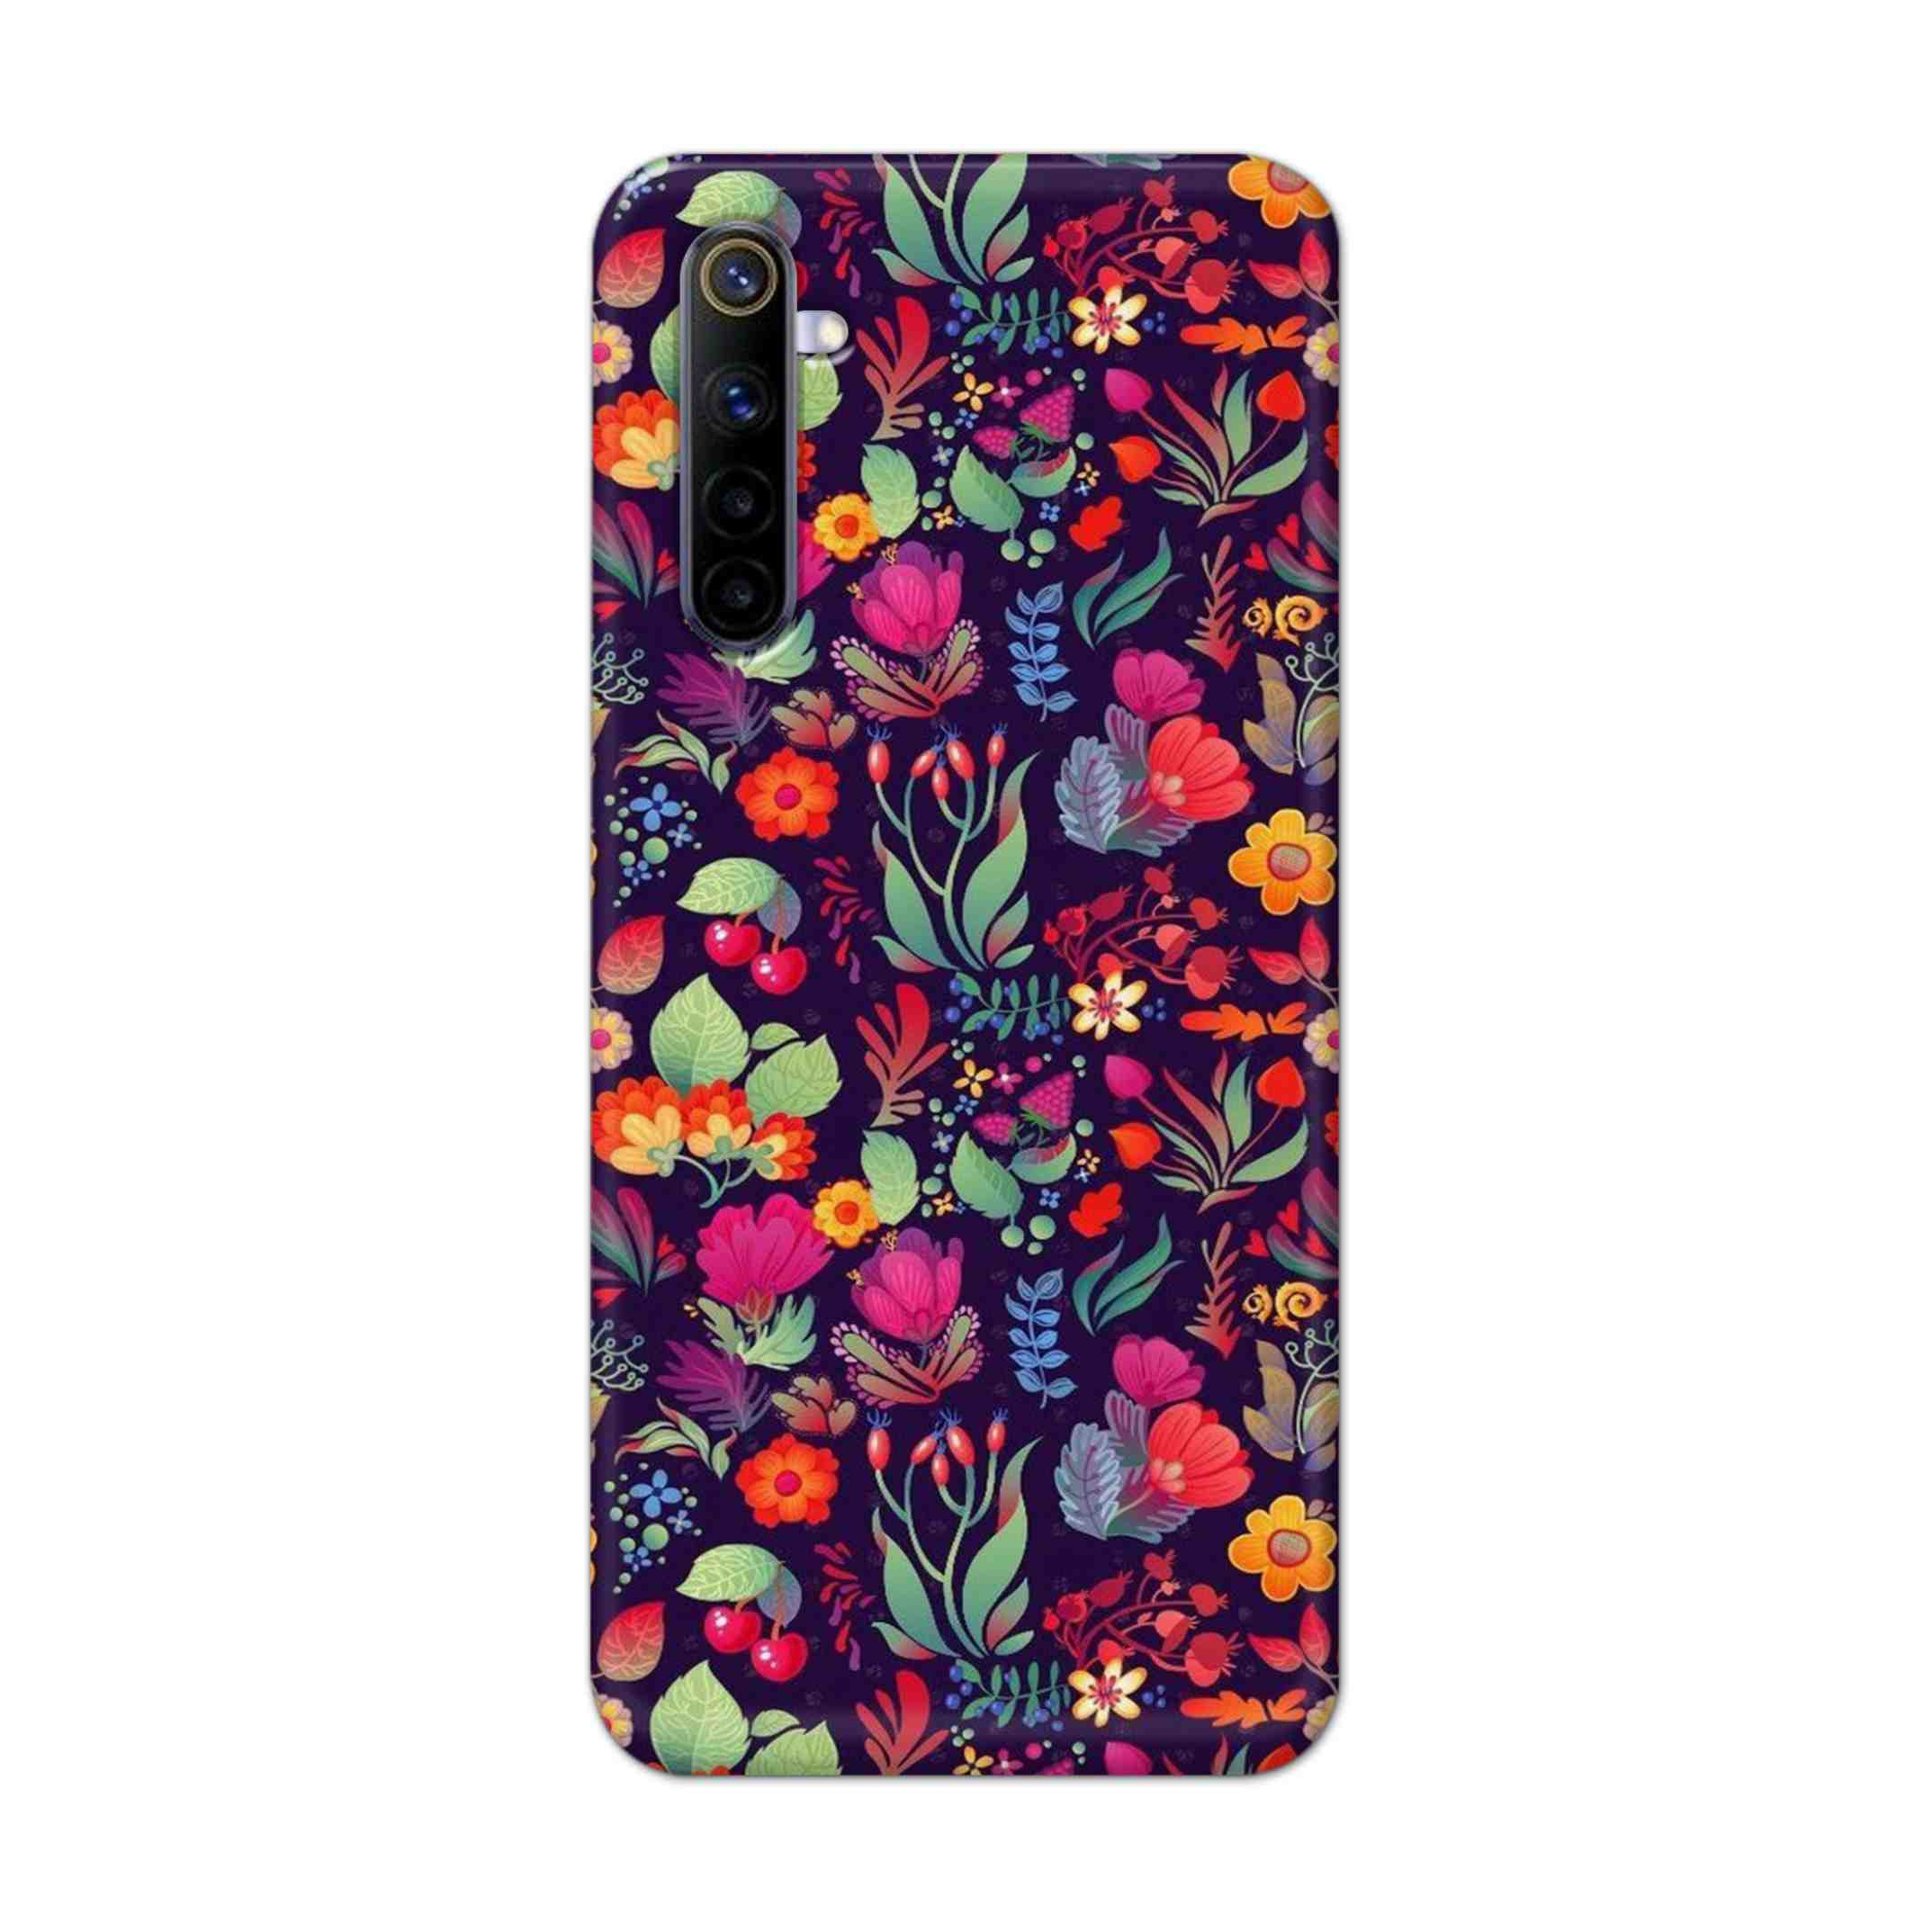 Buy Fruits Flower Hard Back Mobile Phone Case Cover For REALME 6 Online